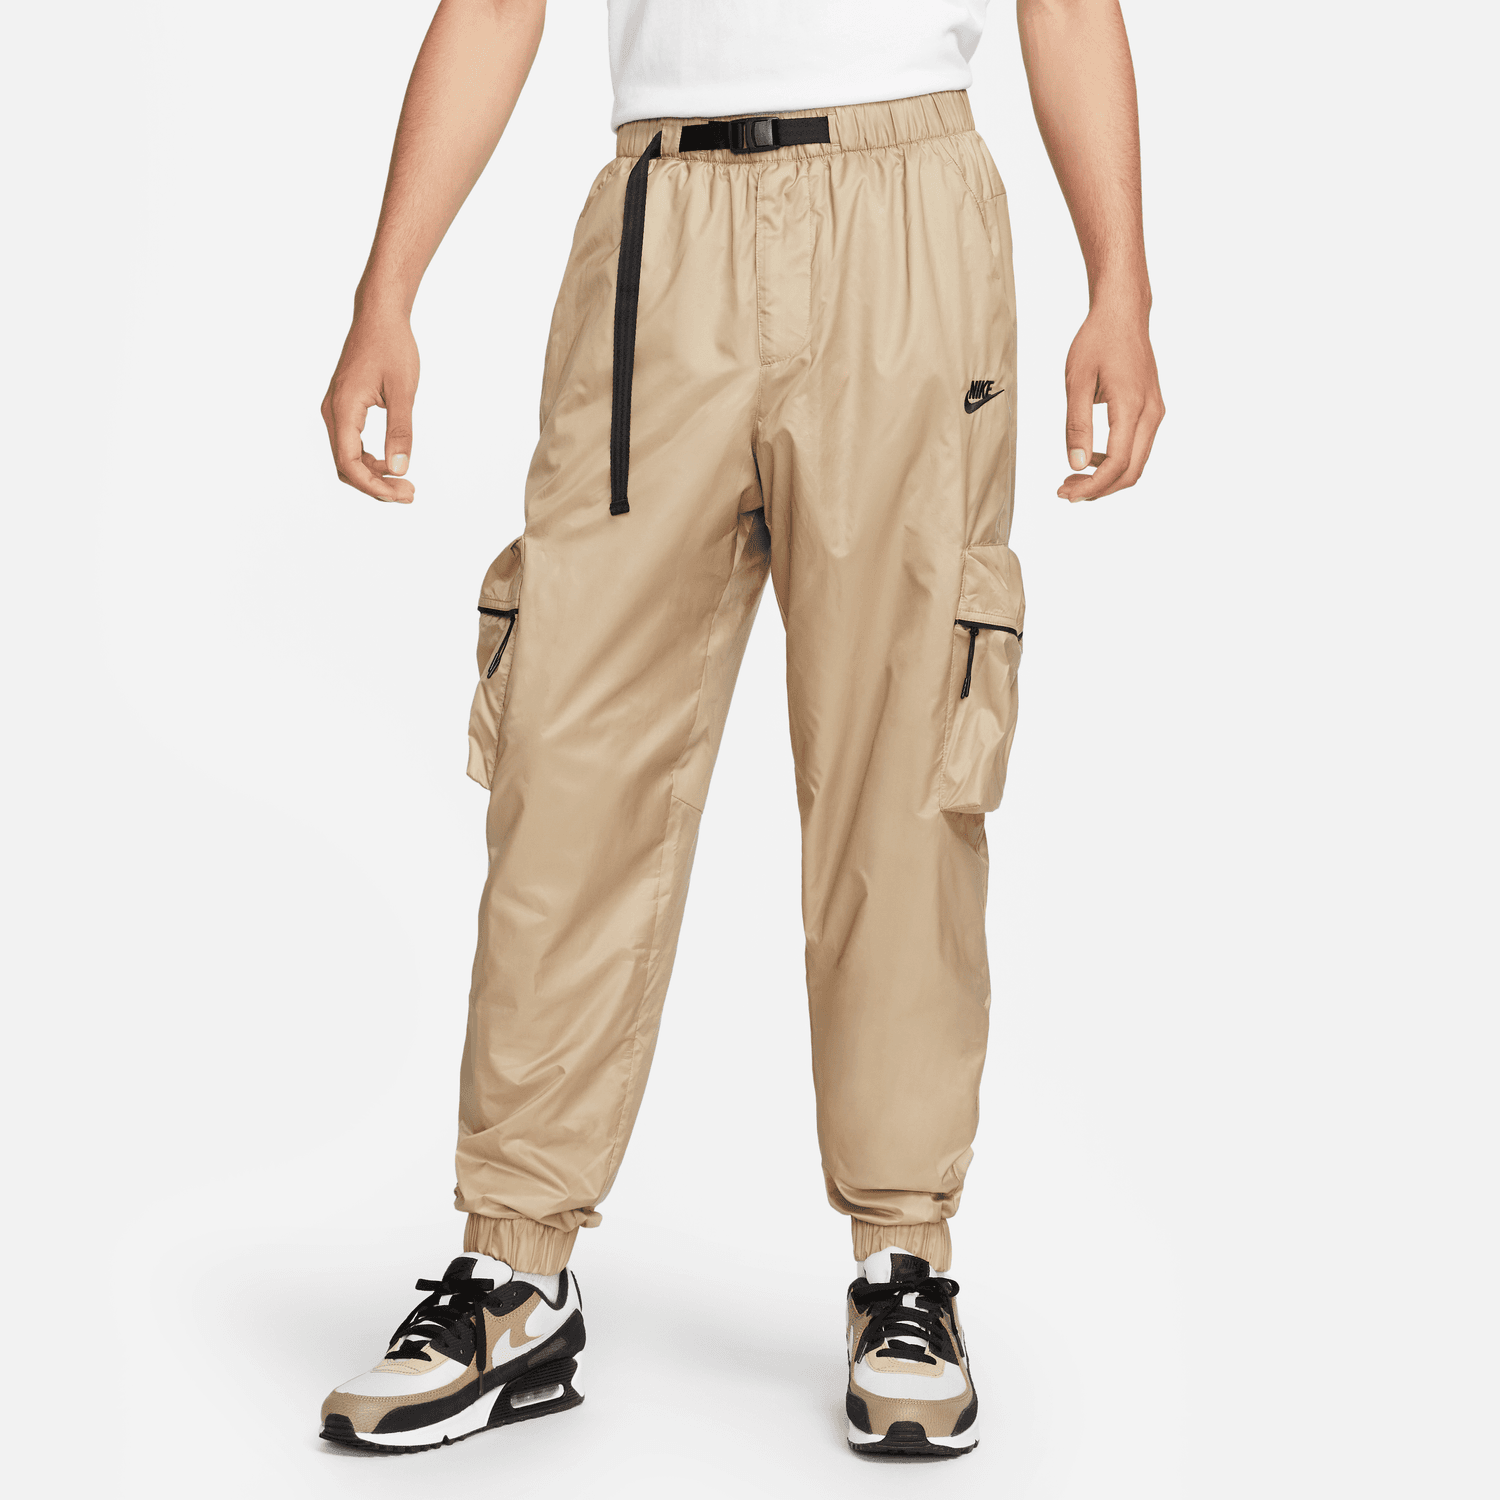 Pantaloni Nike Tech - Beige/Nero